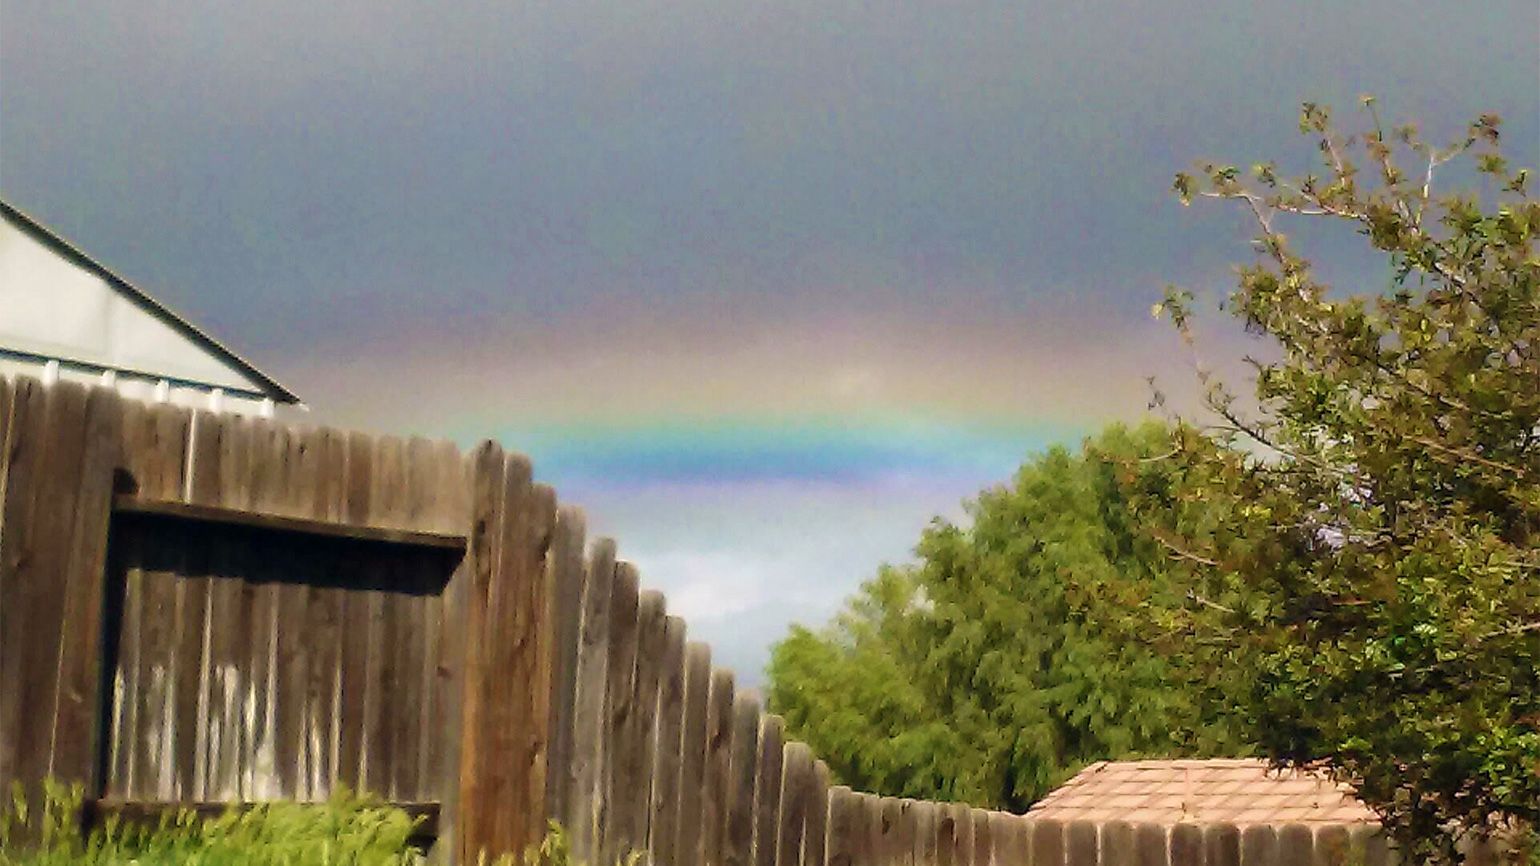 The rainbow that follows a spring shower